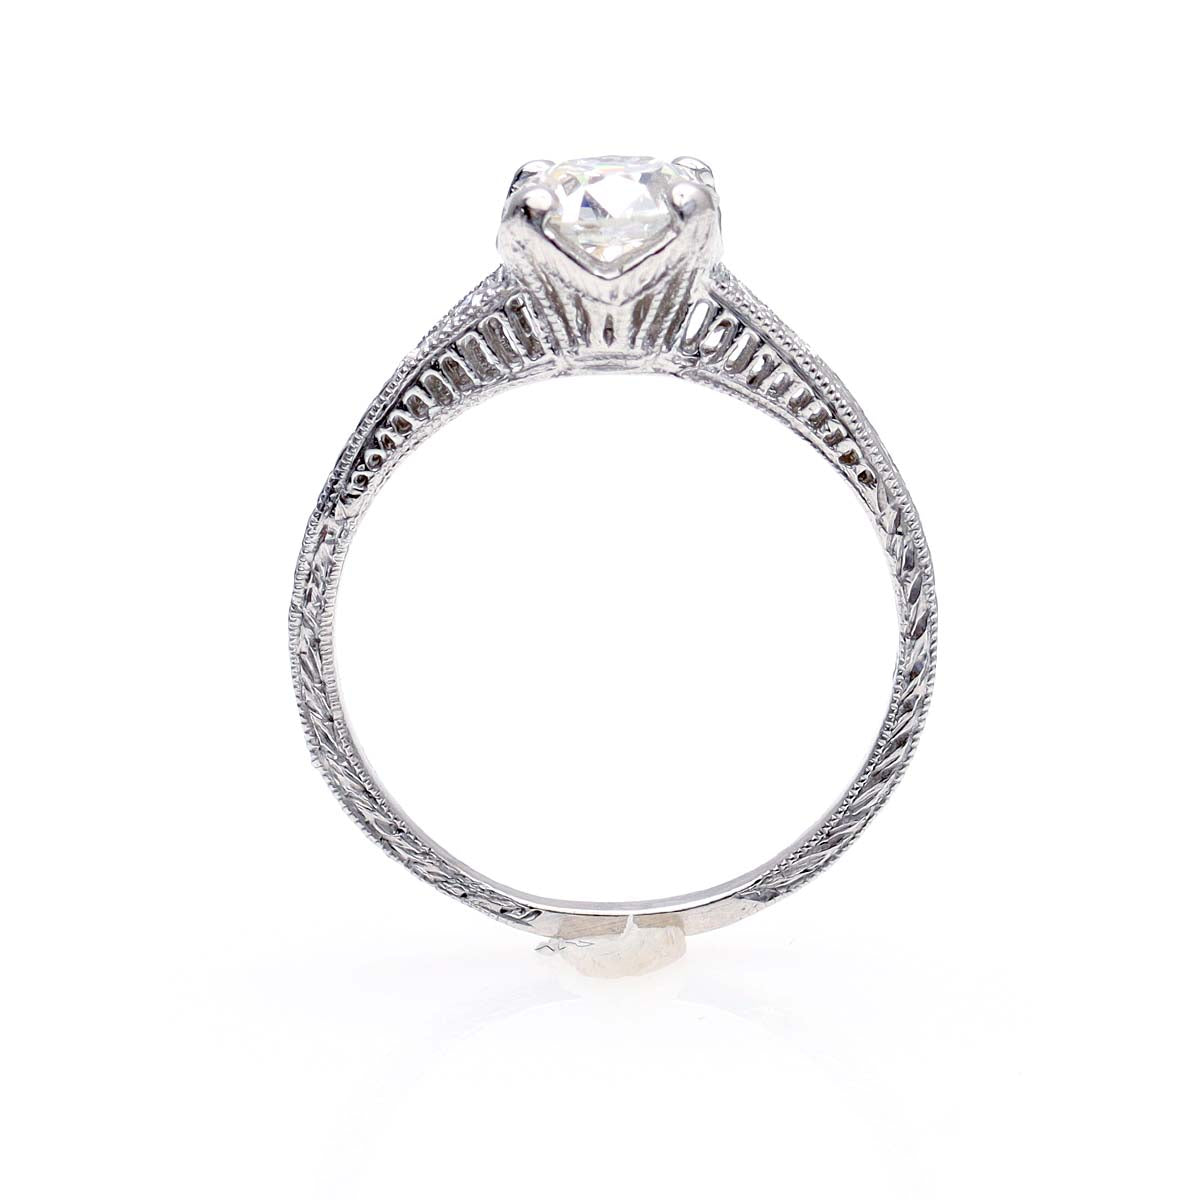 Replica Art Deco Engagement Ring #3407-2